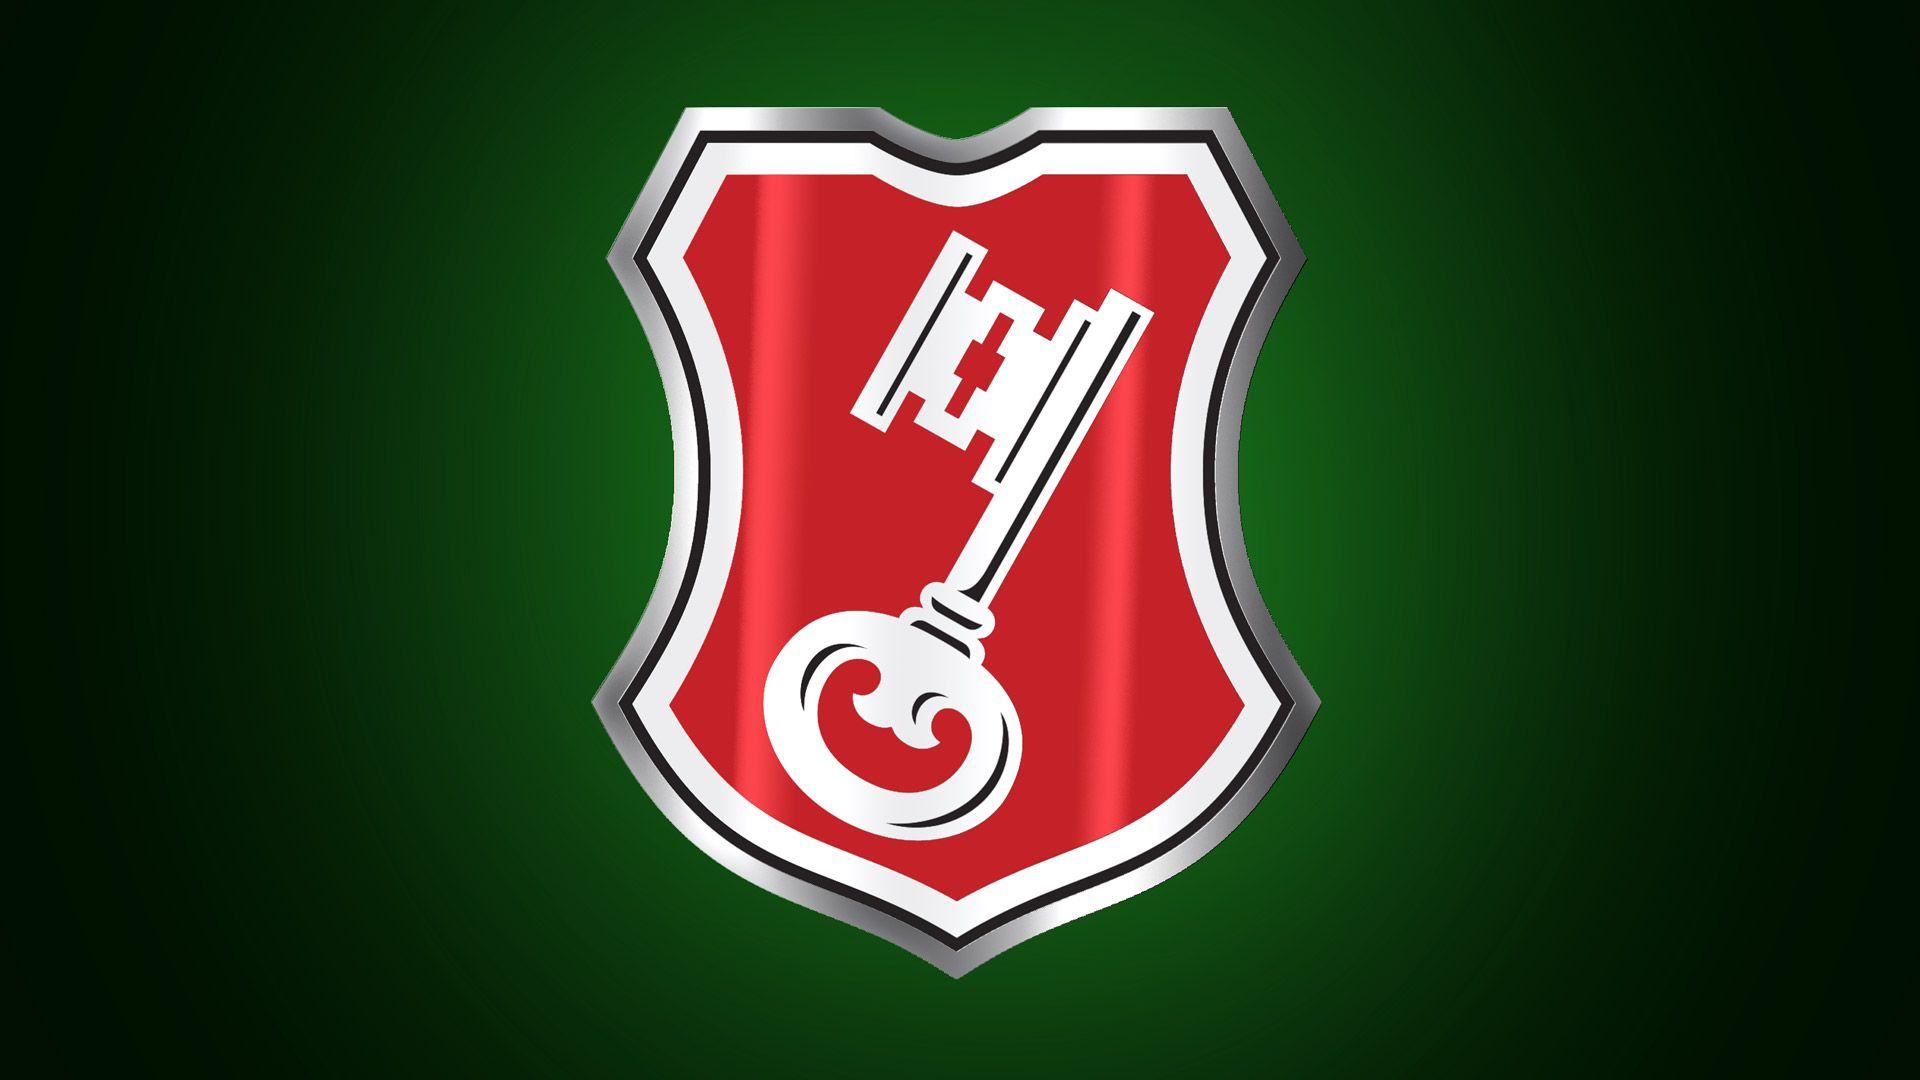 Green and Red Shield Logo - Becks